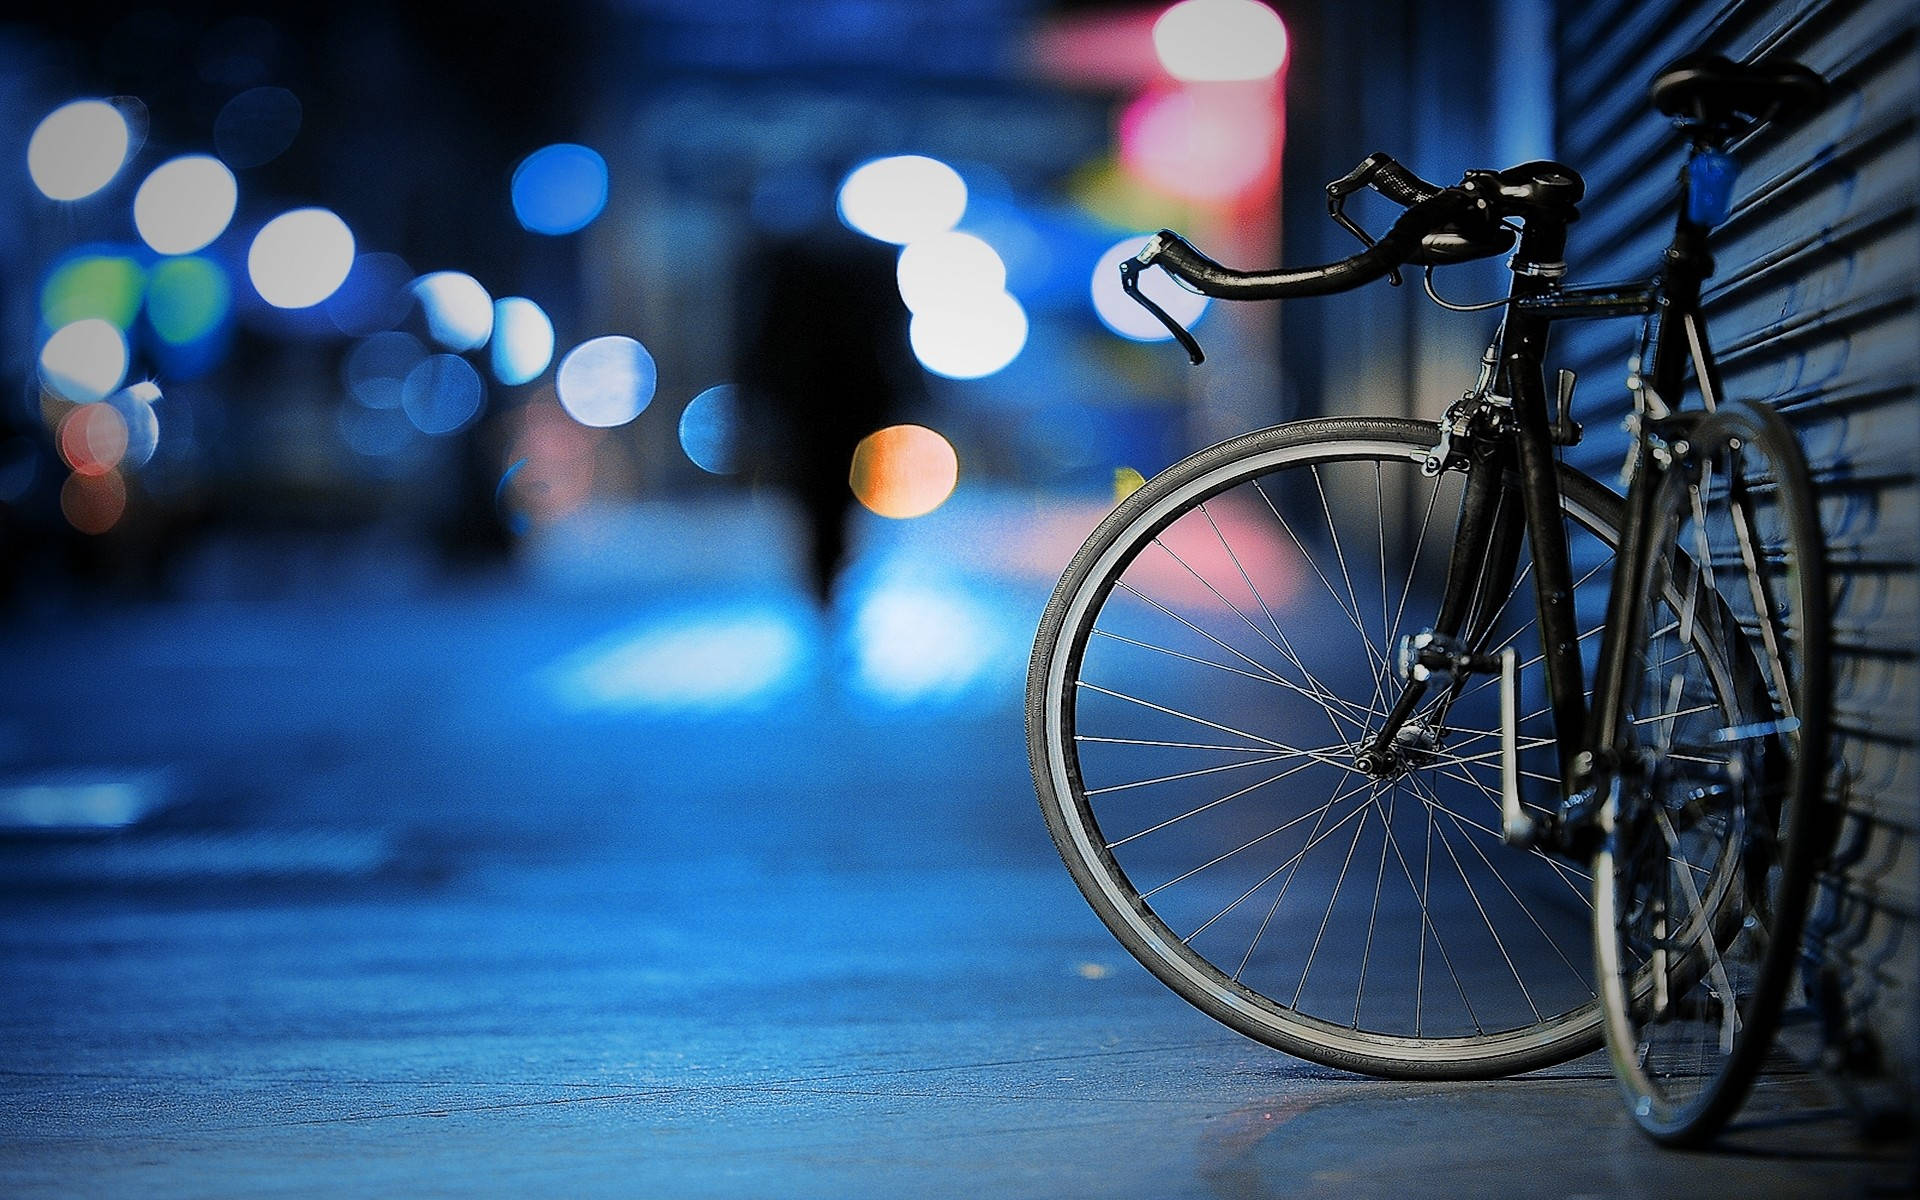 Bicycle At Nighttime Wallpaper